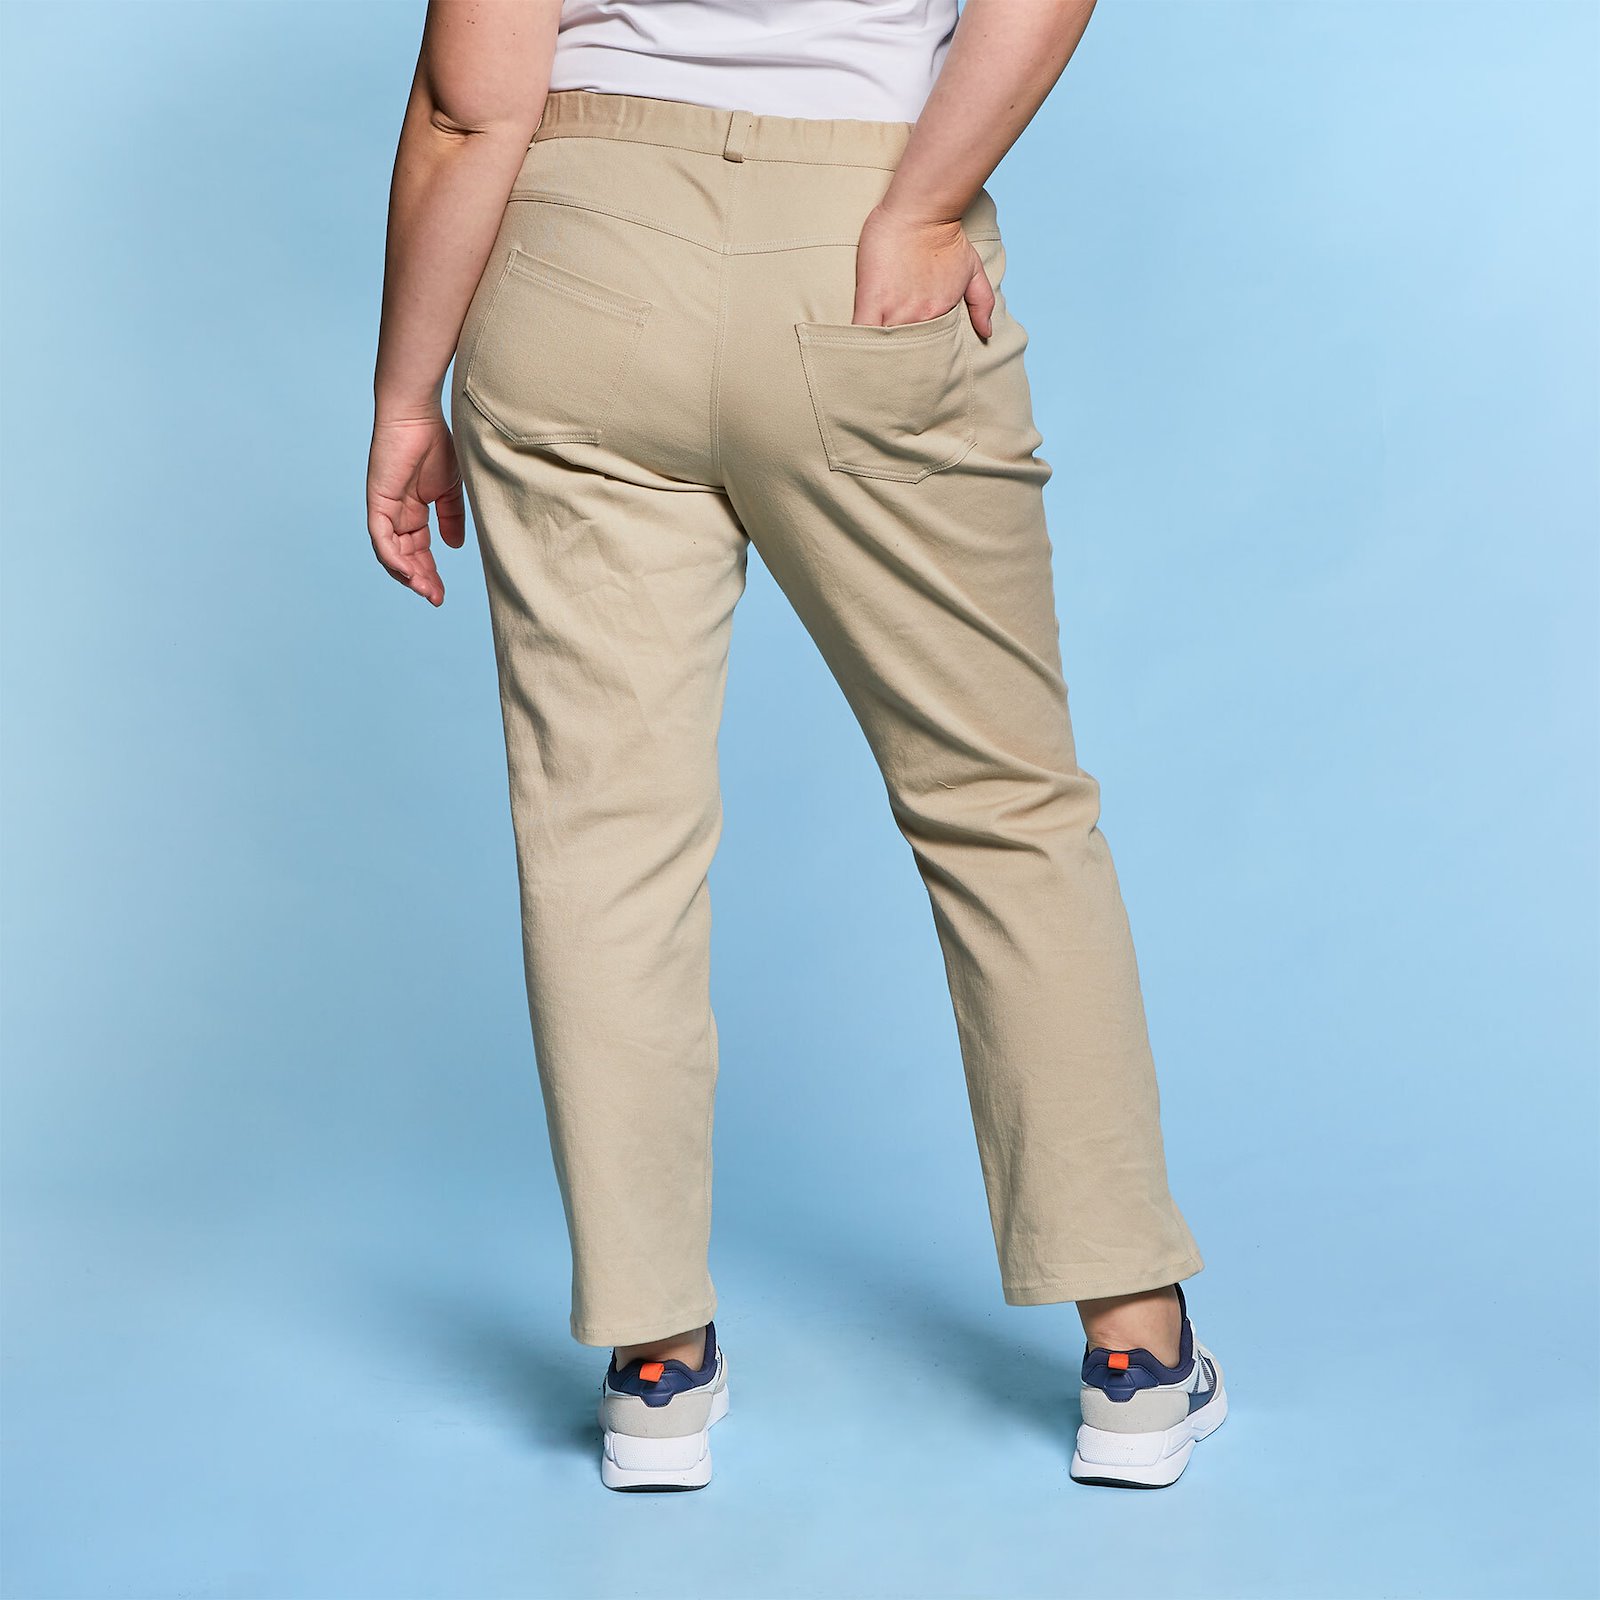 Classic jeans w. elastic waistban, 60/32 p70007000_p70007001_p70007002_p70007003_p70007004_pack_e